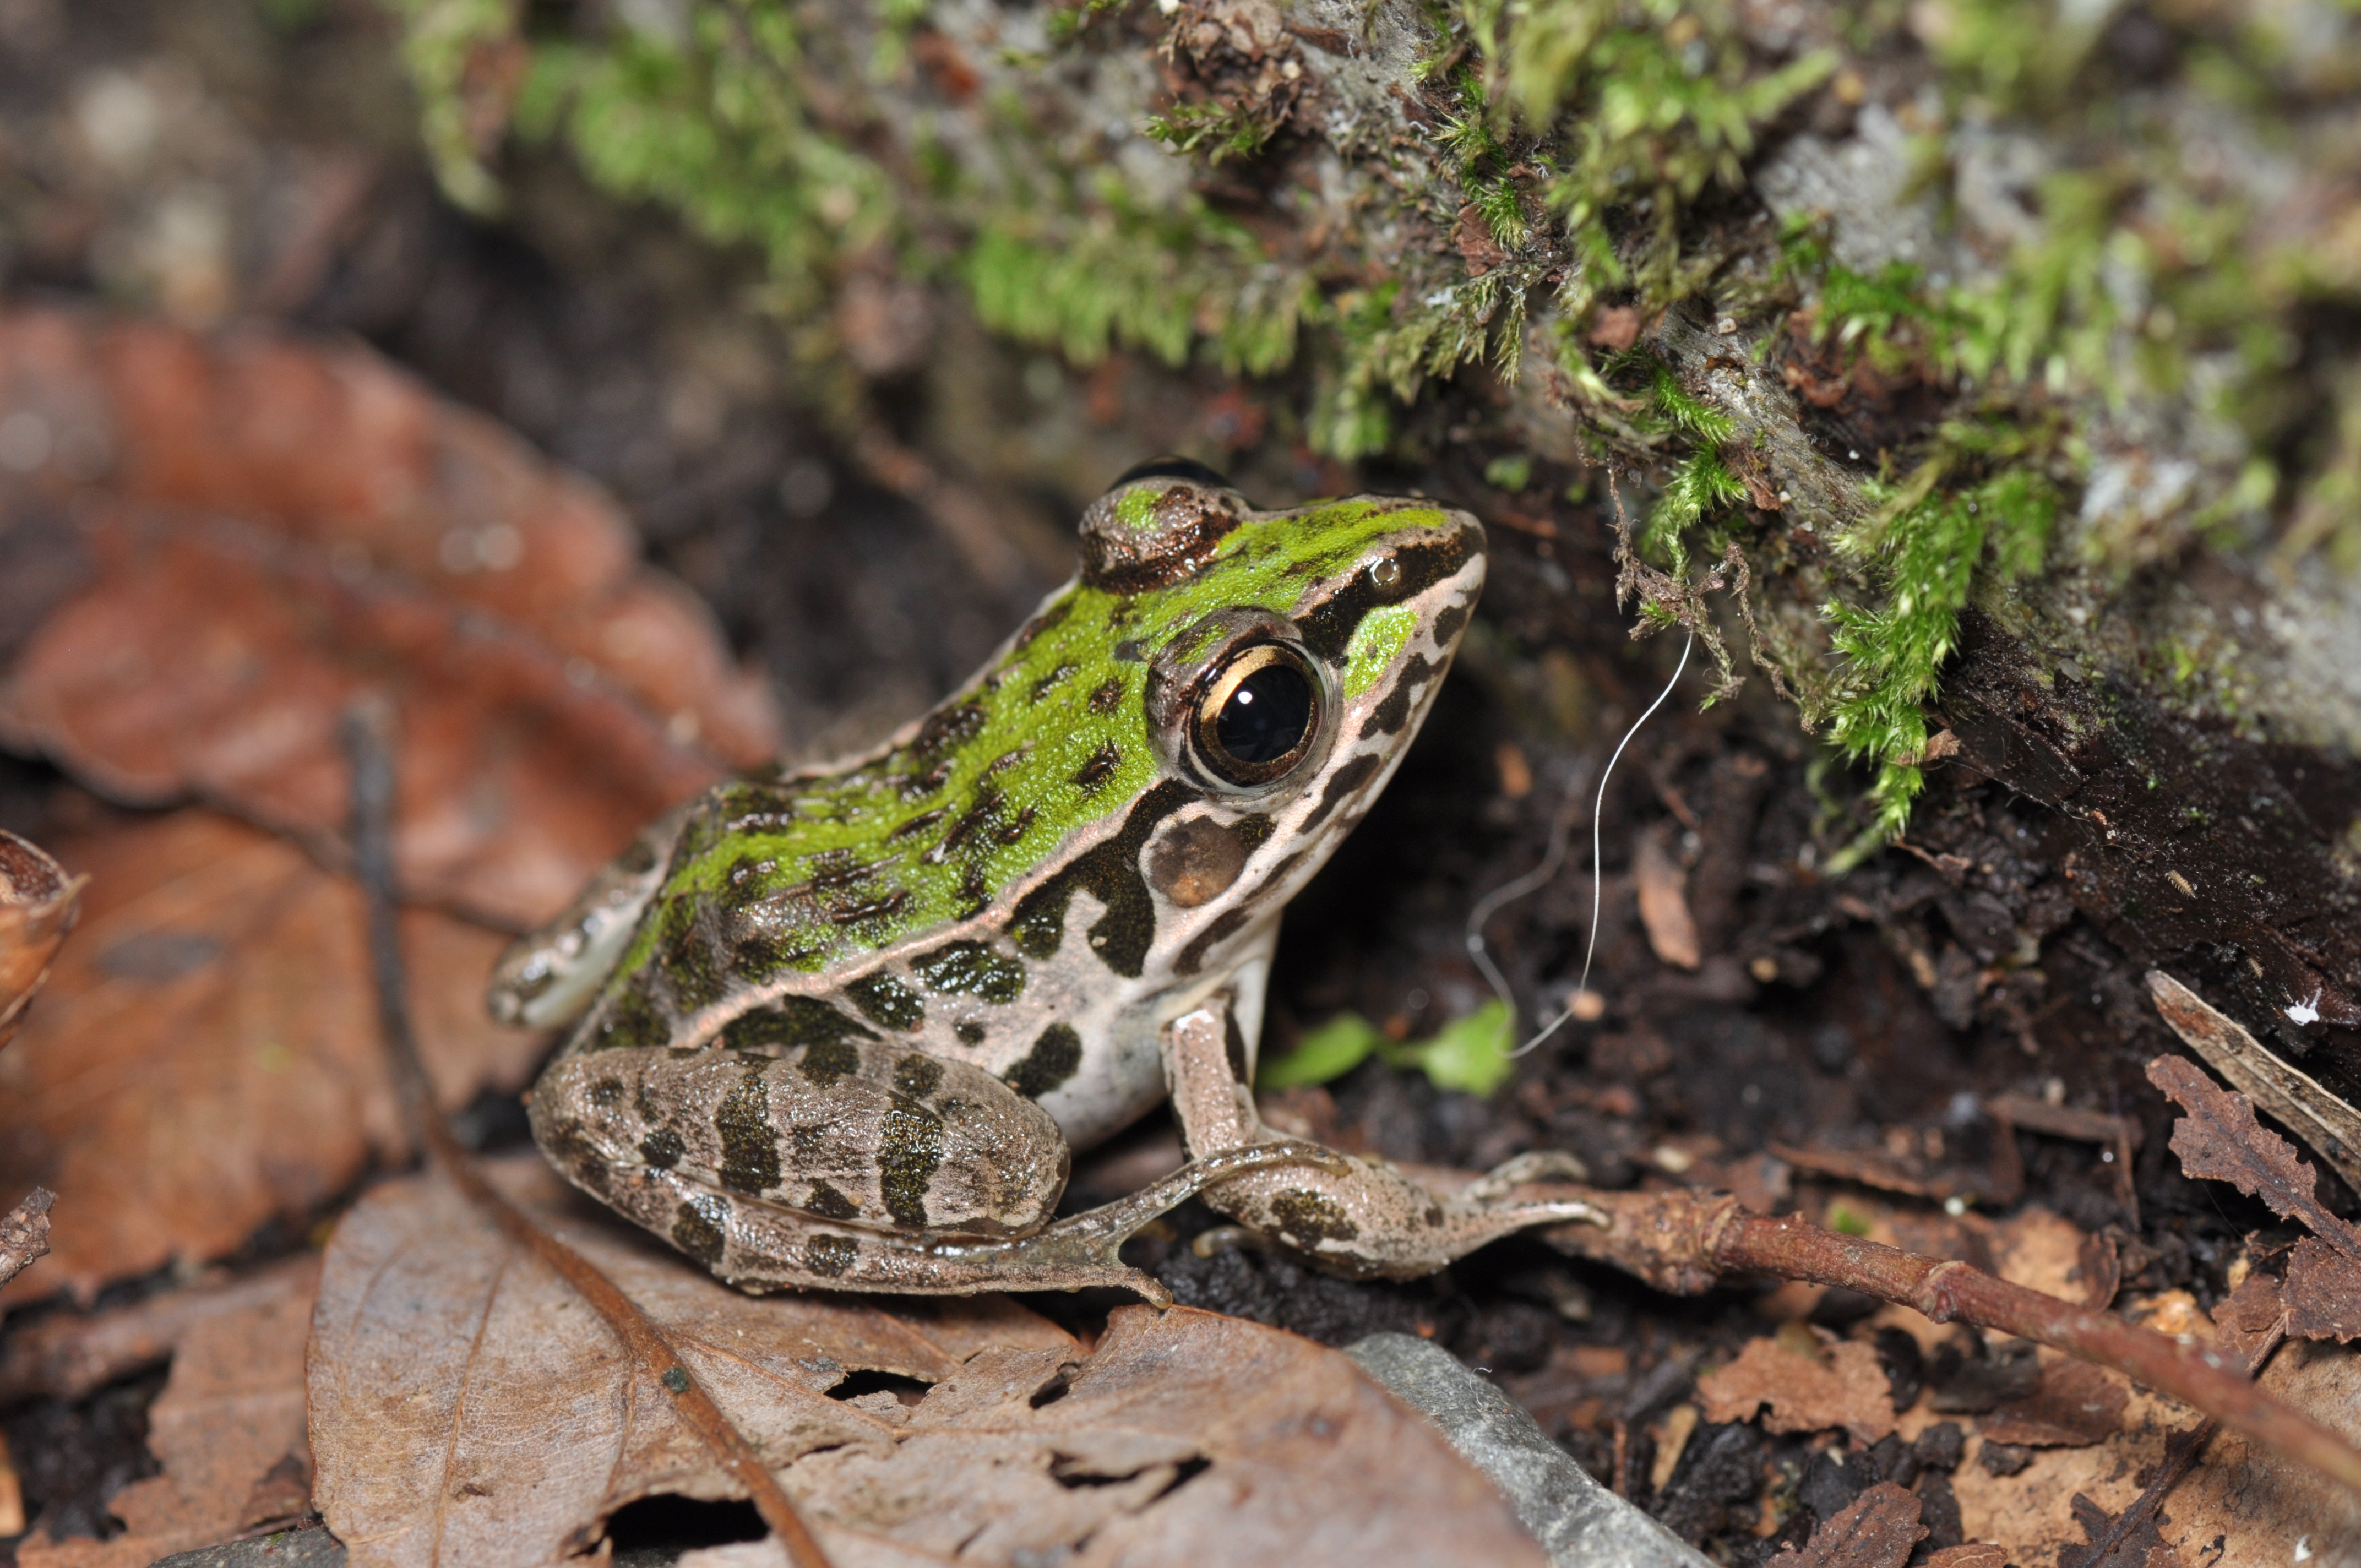 Dark-spotted frog (Rana nigromaculata)